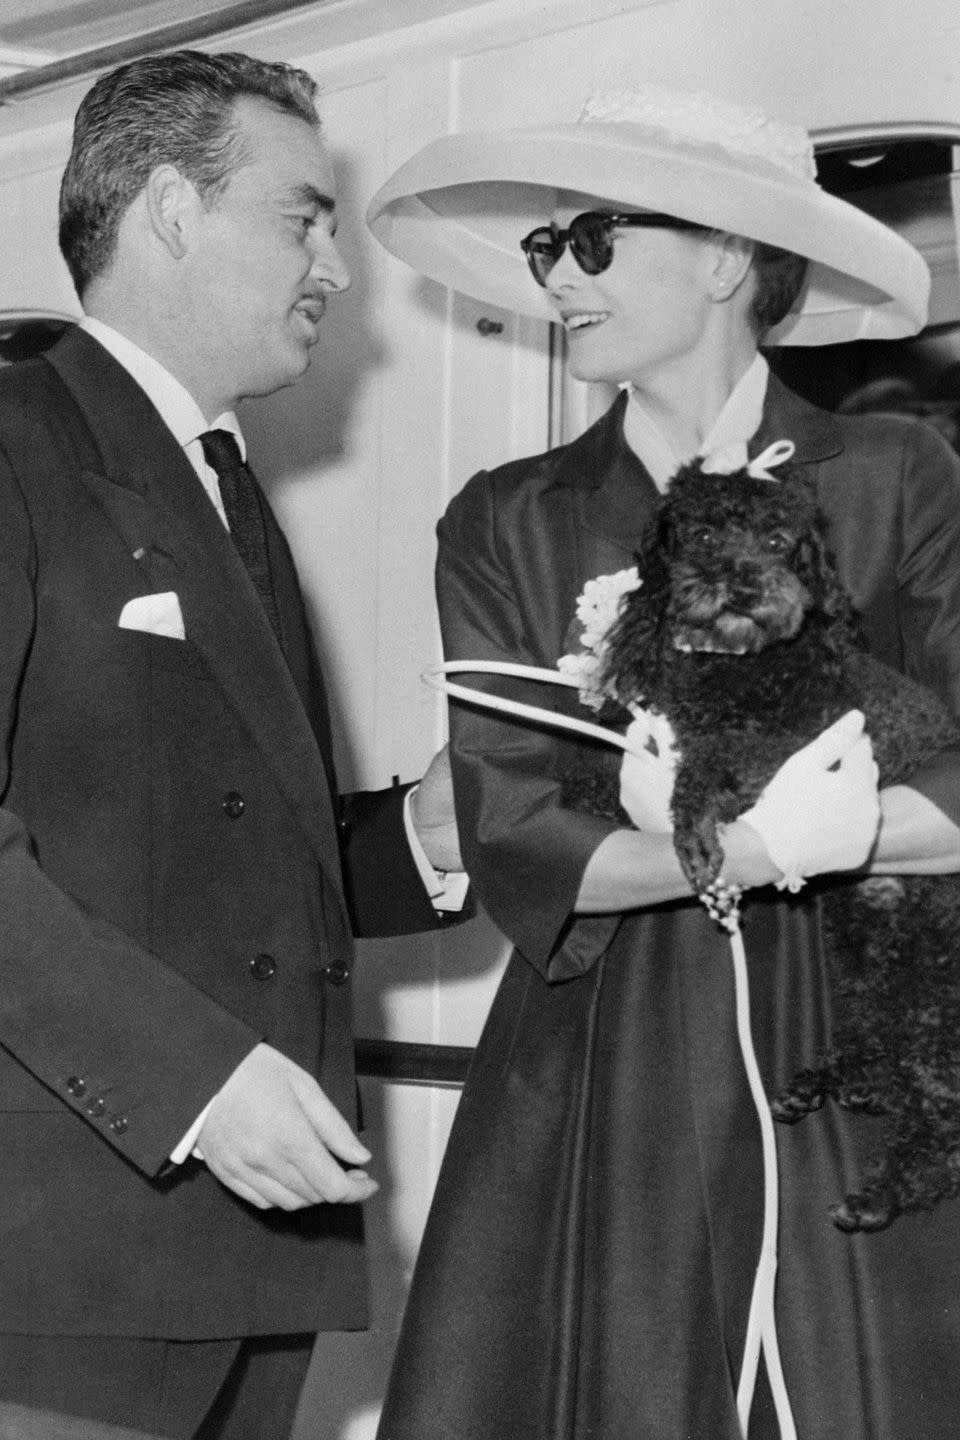 1956: Grace Kelly and Prince Rainier III of Monaco